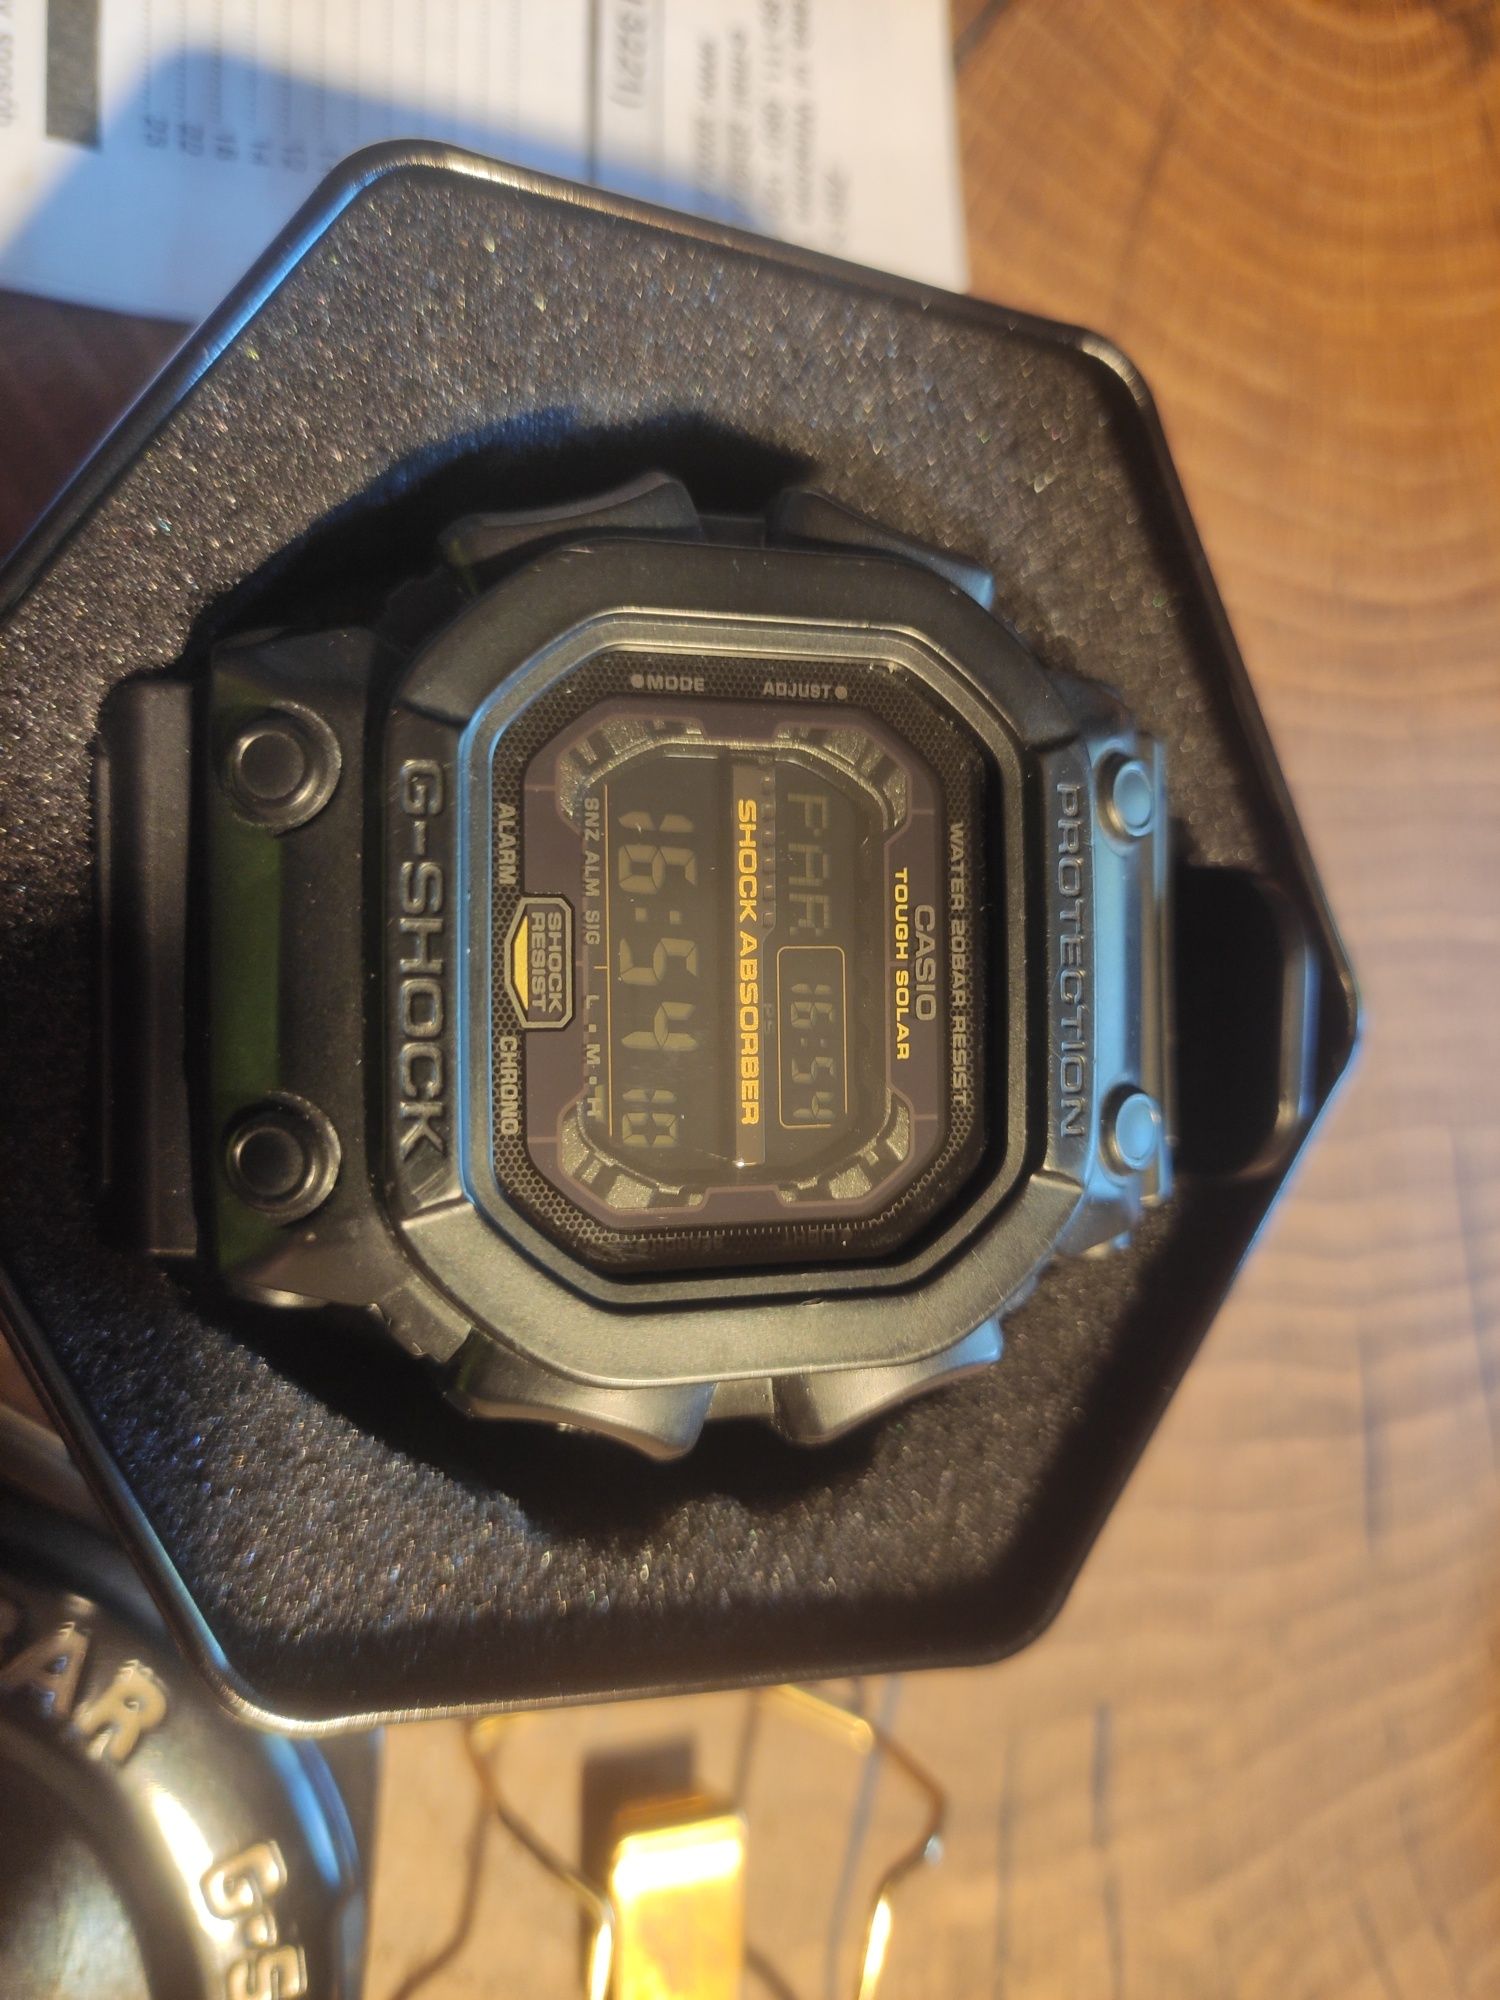 Piękny zegarek G-Shock gx-56gb